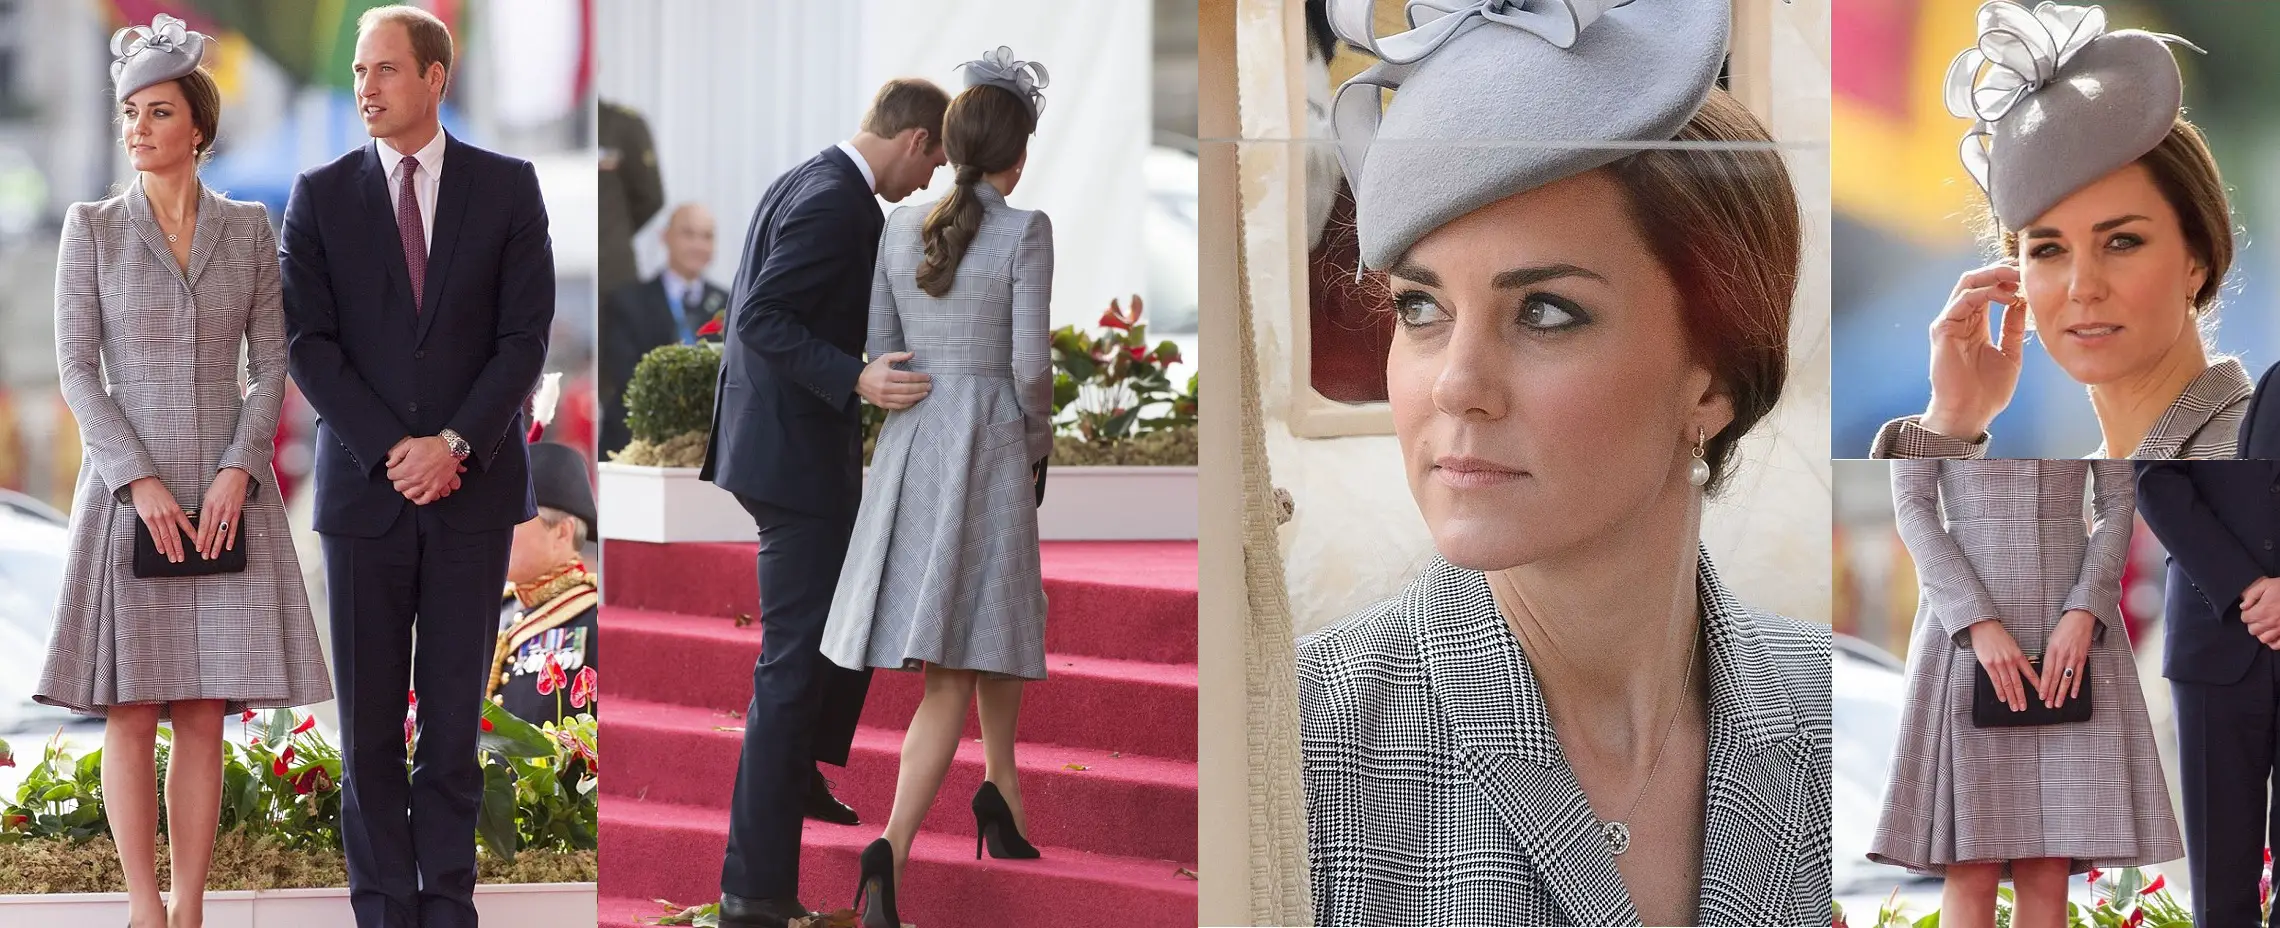 Duchess of Cambridge wore grey Alexander McQueen coat dress for Singapore State visit in 2014